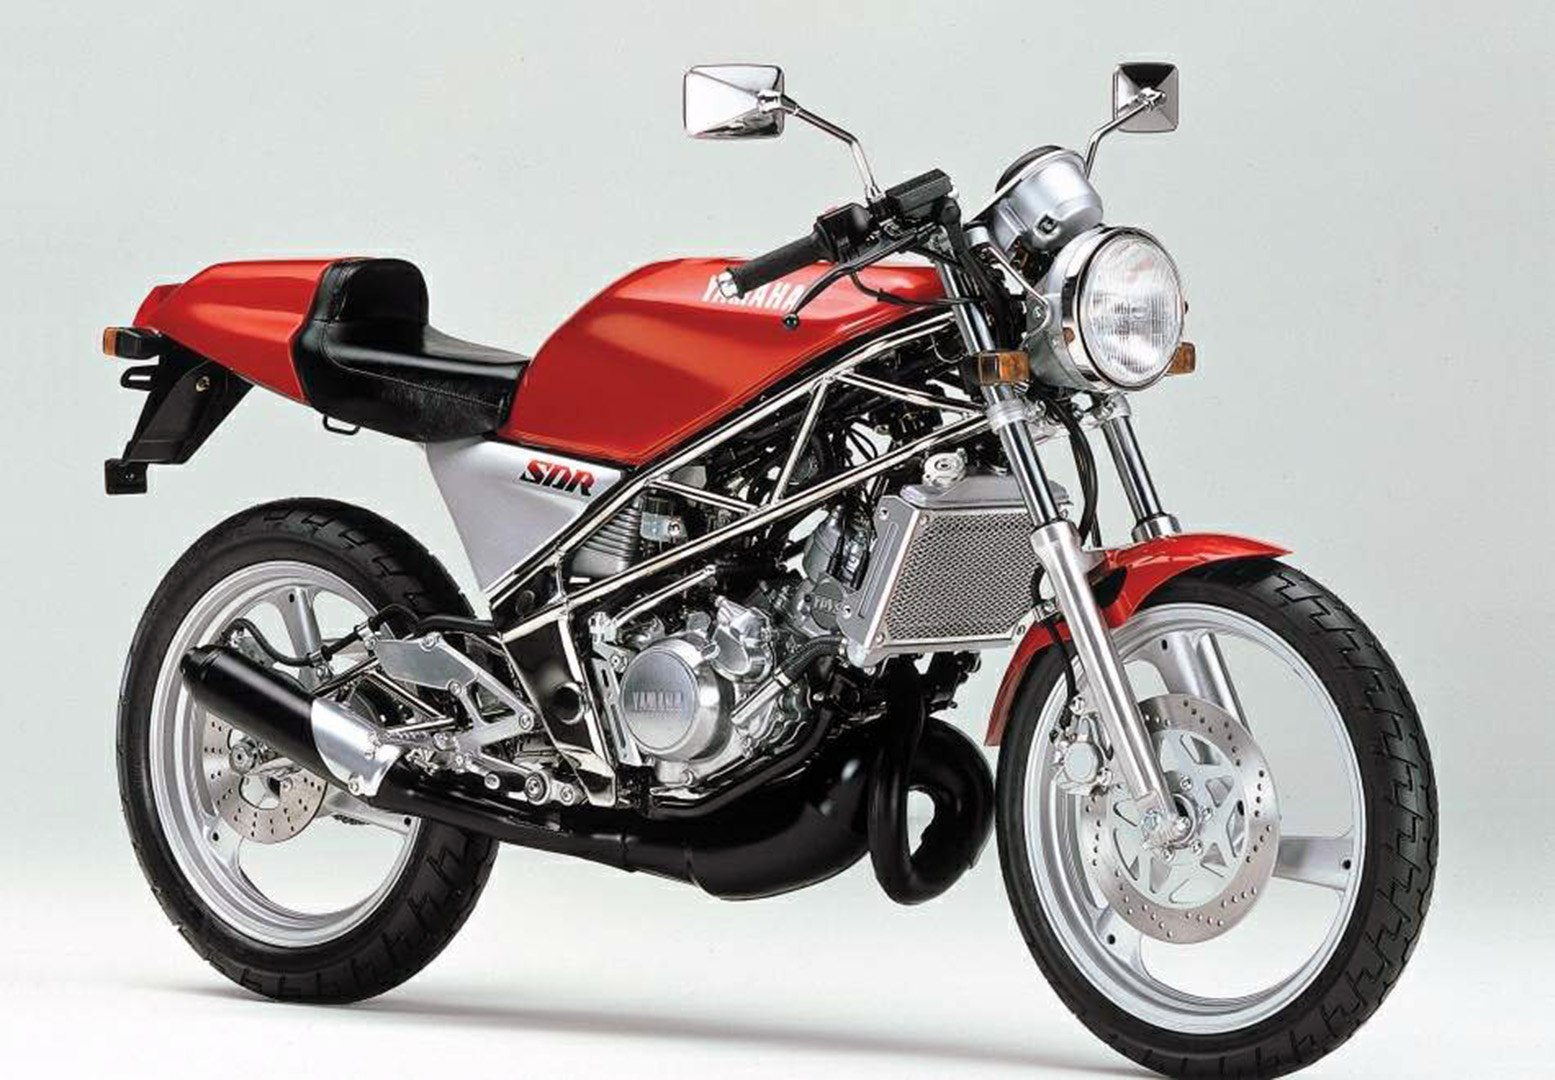 Moto del día: Yamaha SDR 200